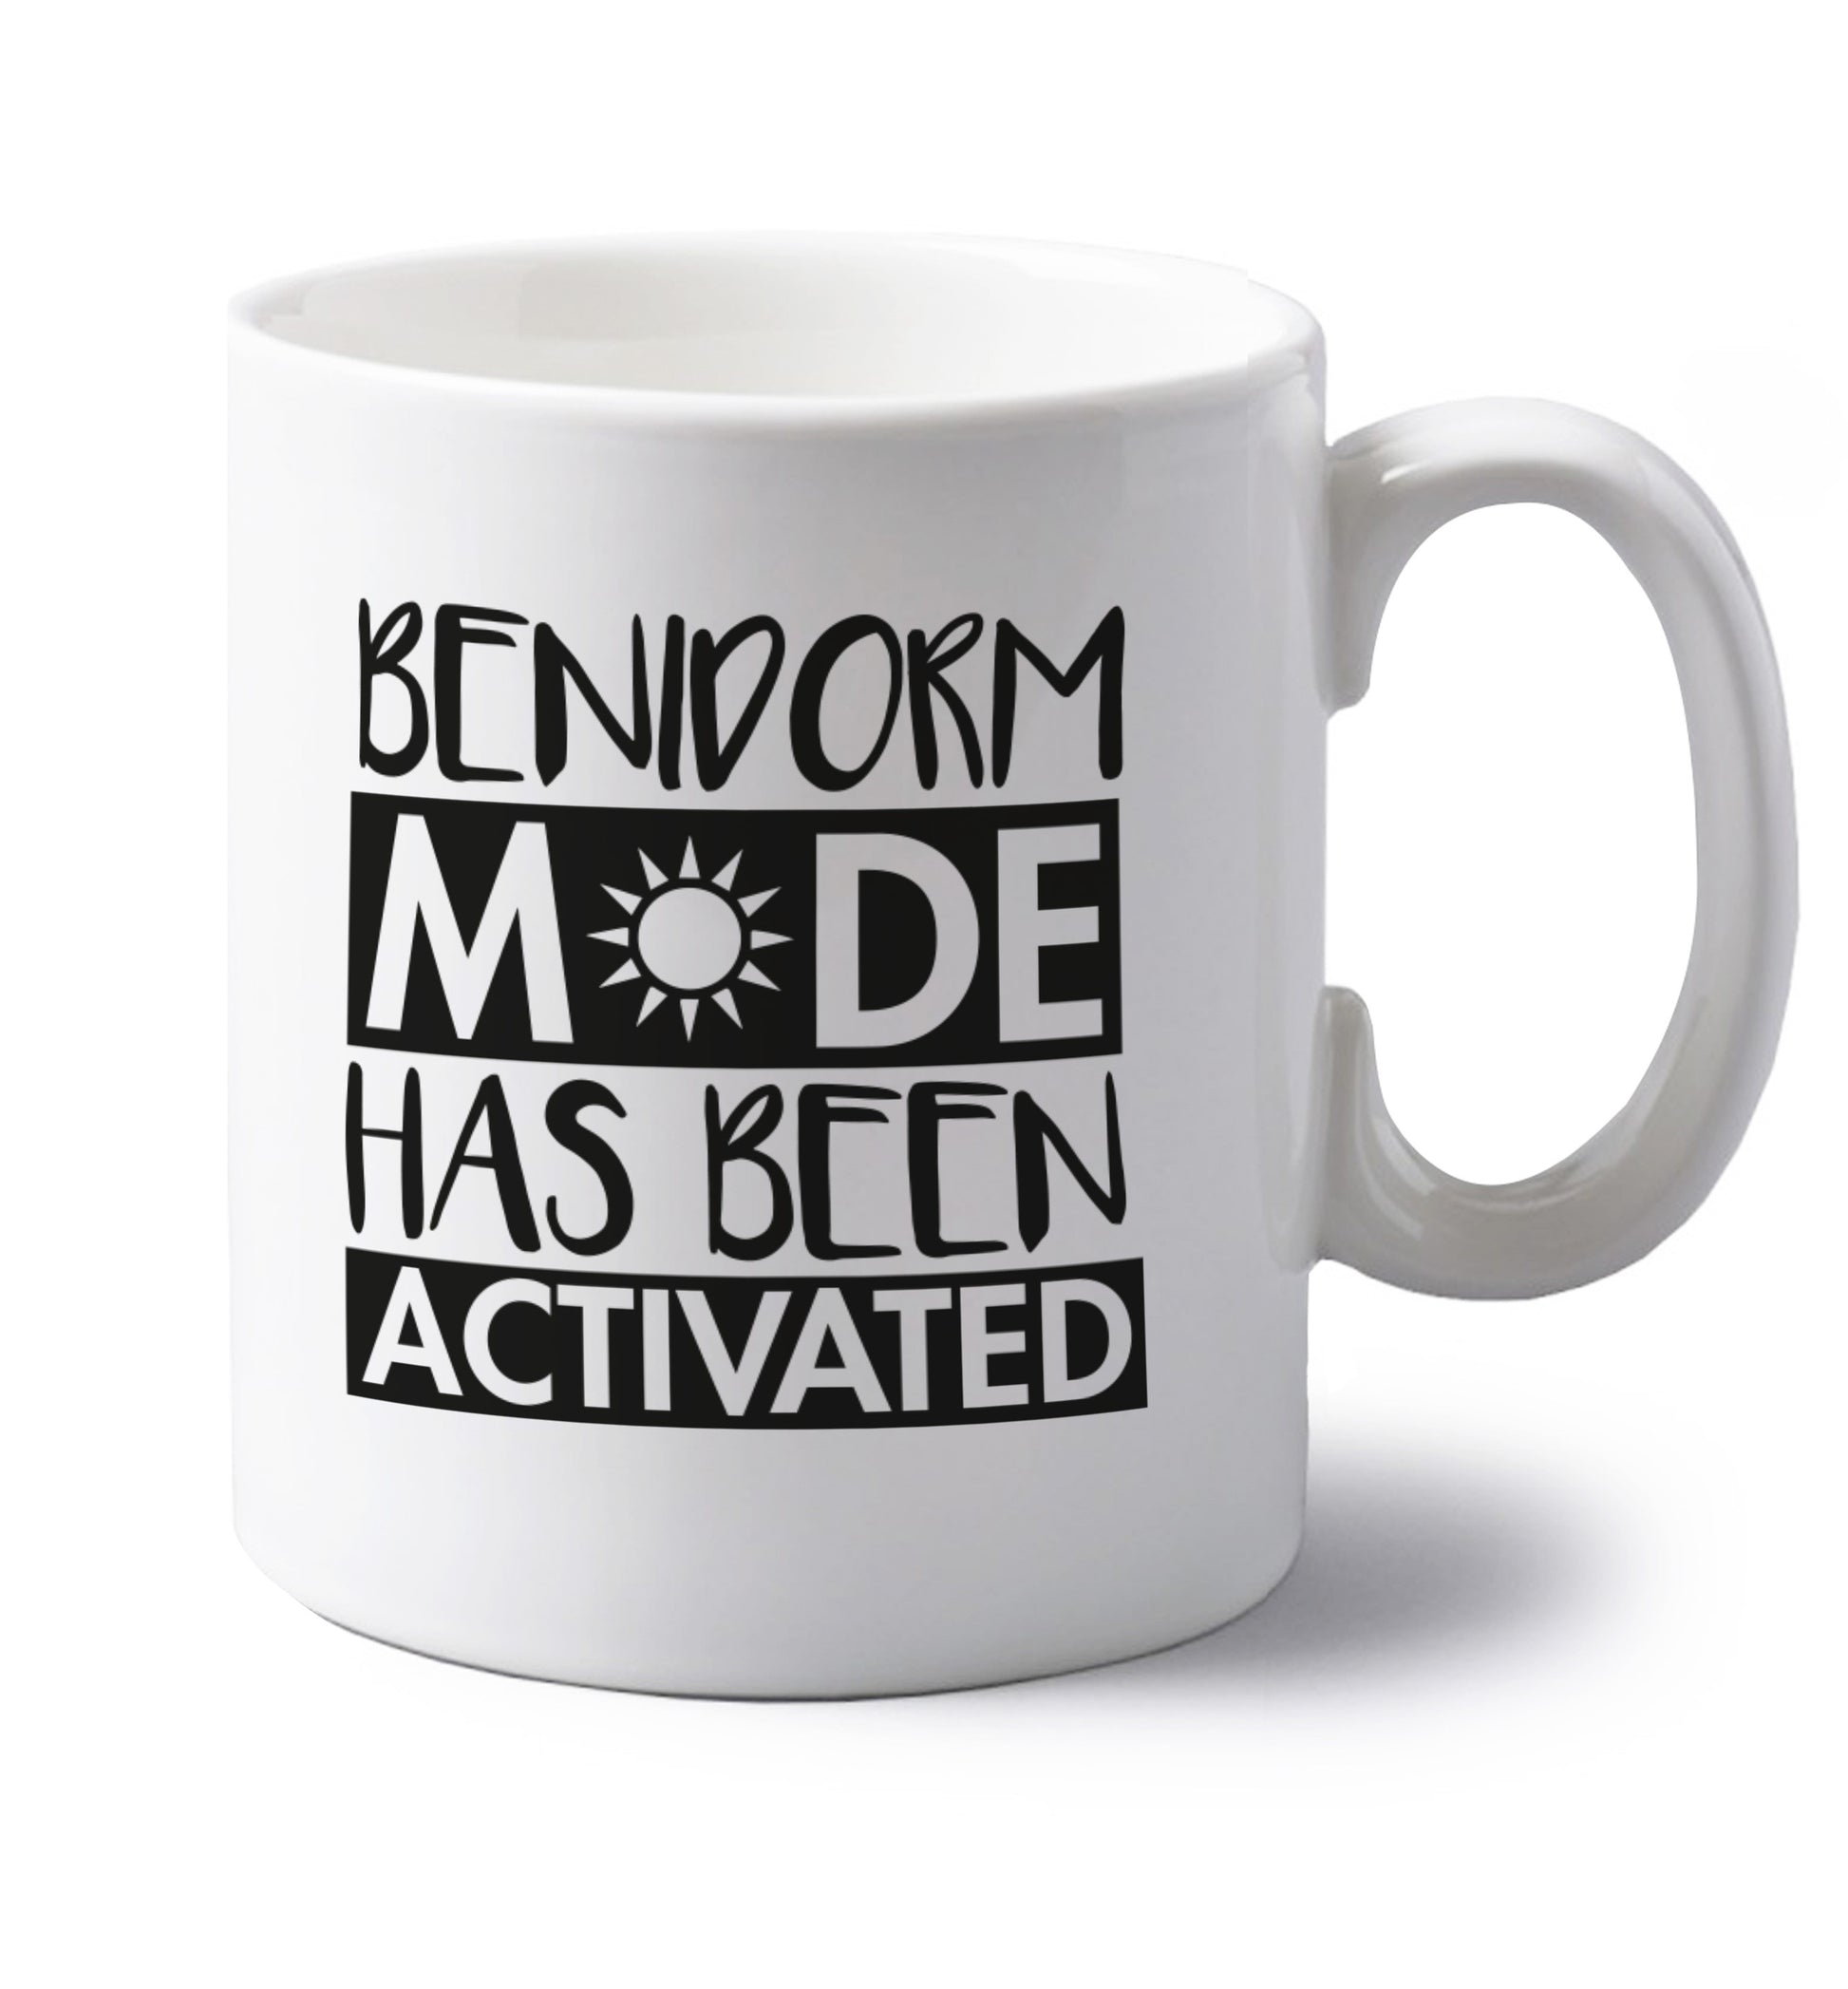 Benidorm mode has been activated left handed white ceramic mug 